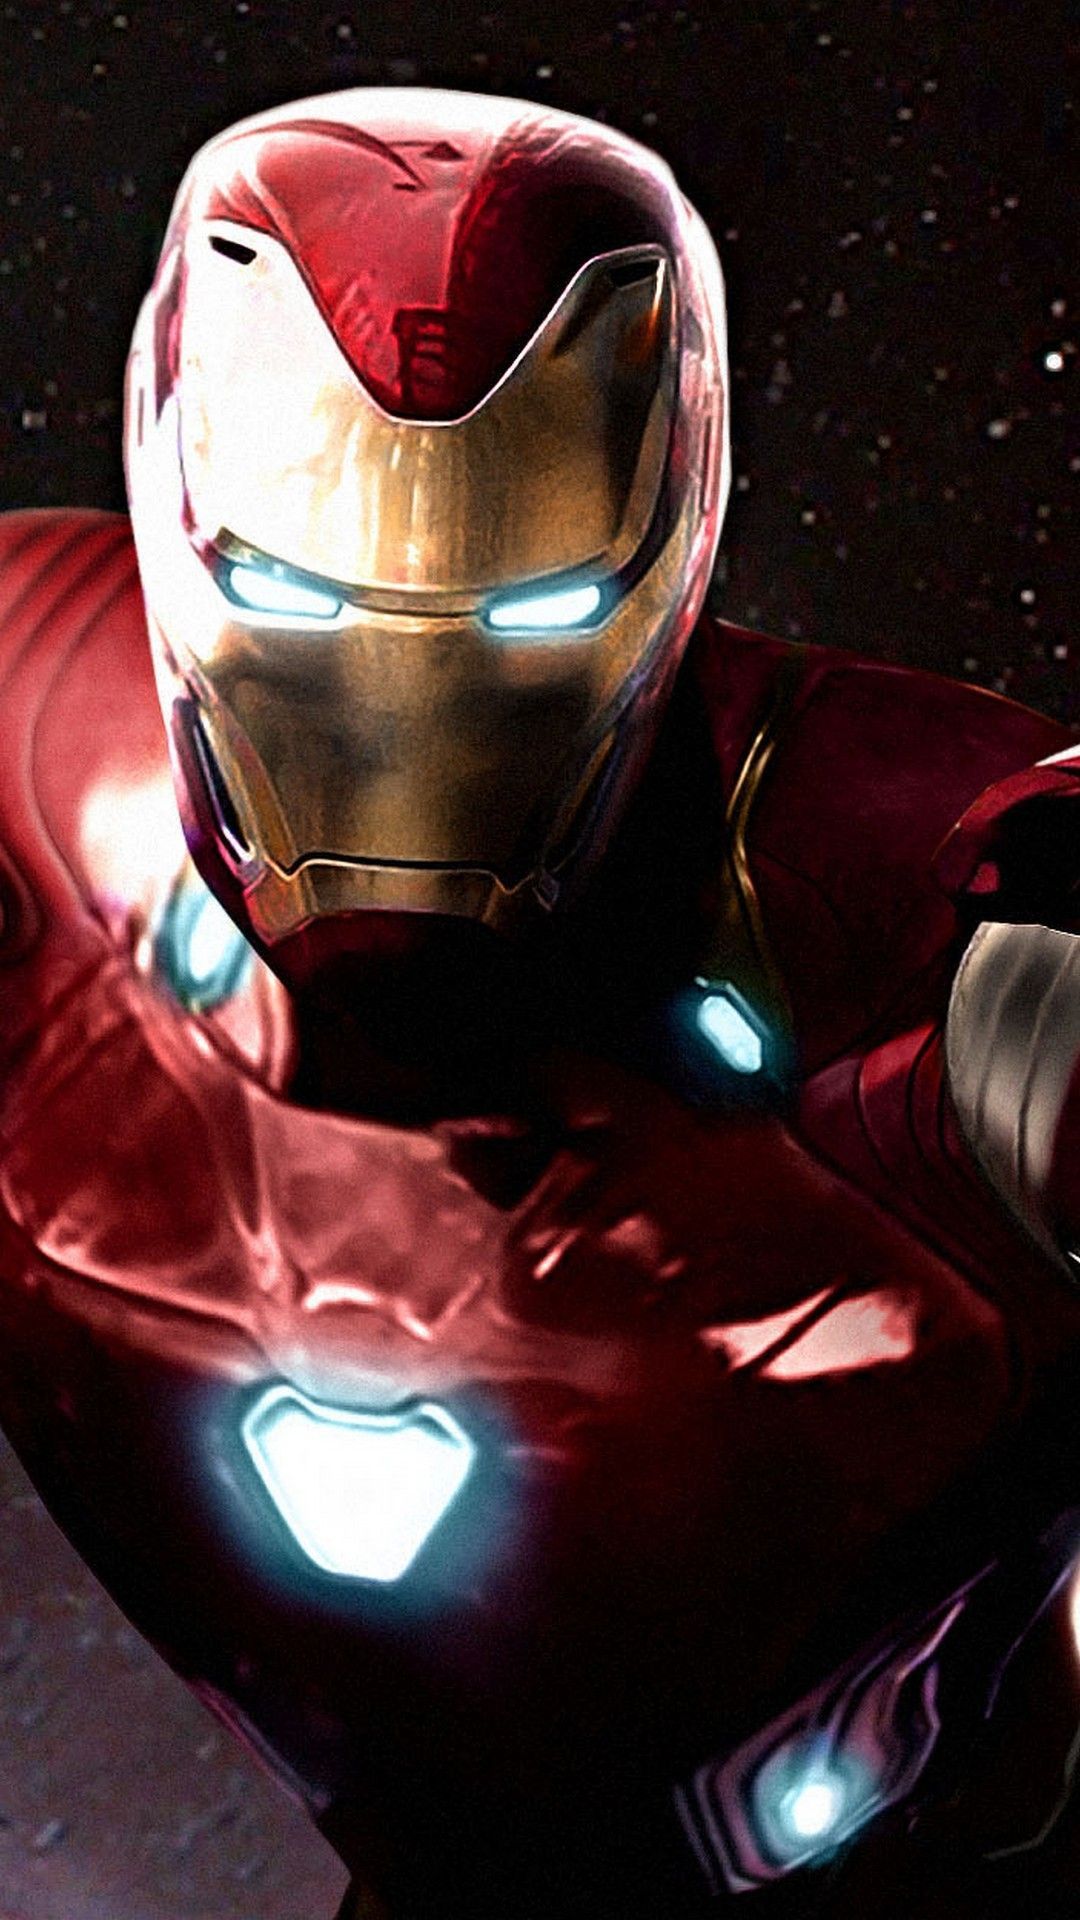 Iron Man Avengers Infinity War iPhone Wallpaper – 2018 iPhone …